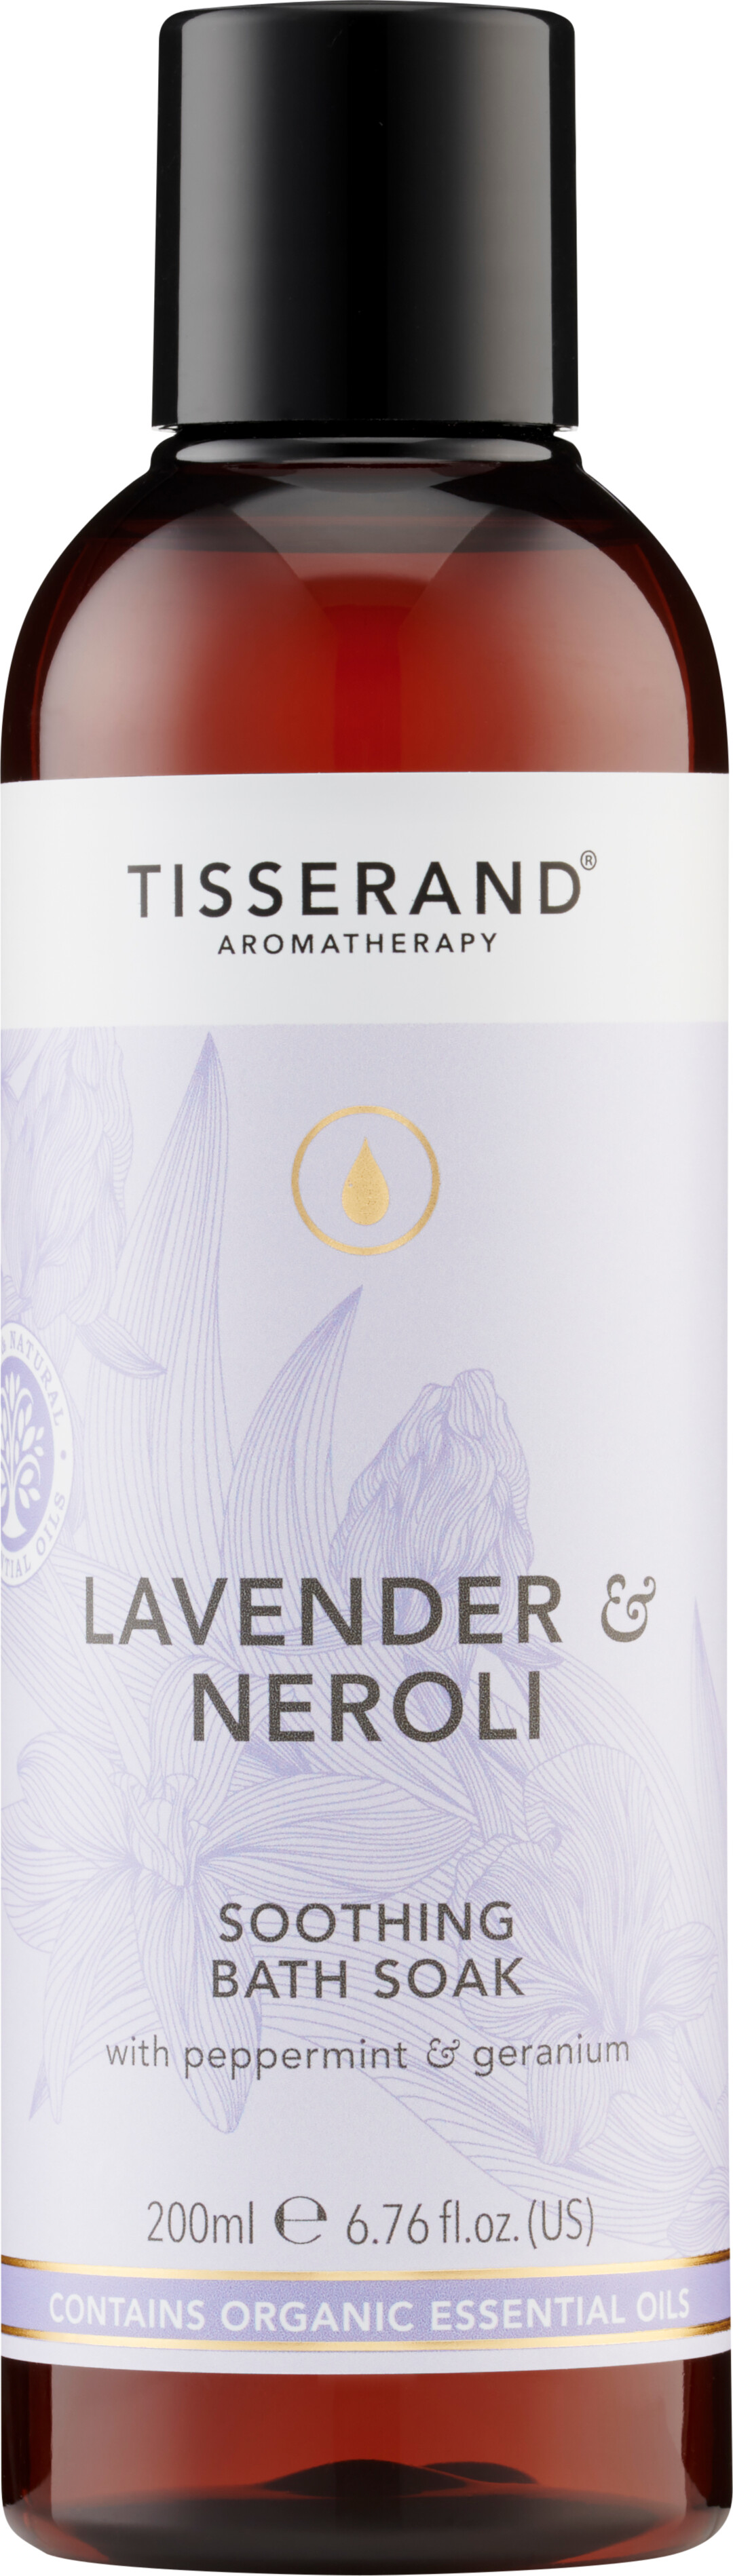 Tisserand Aromatherapy Lavender & Neroli Soothing Bath Soak 200ml